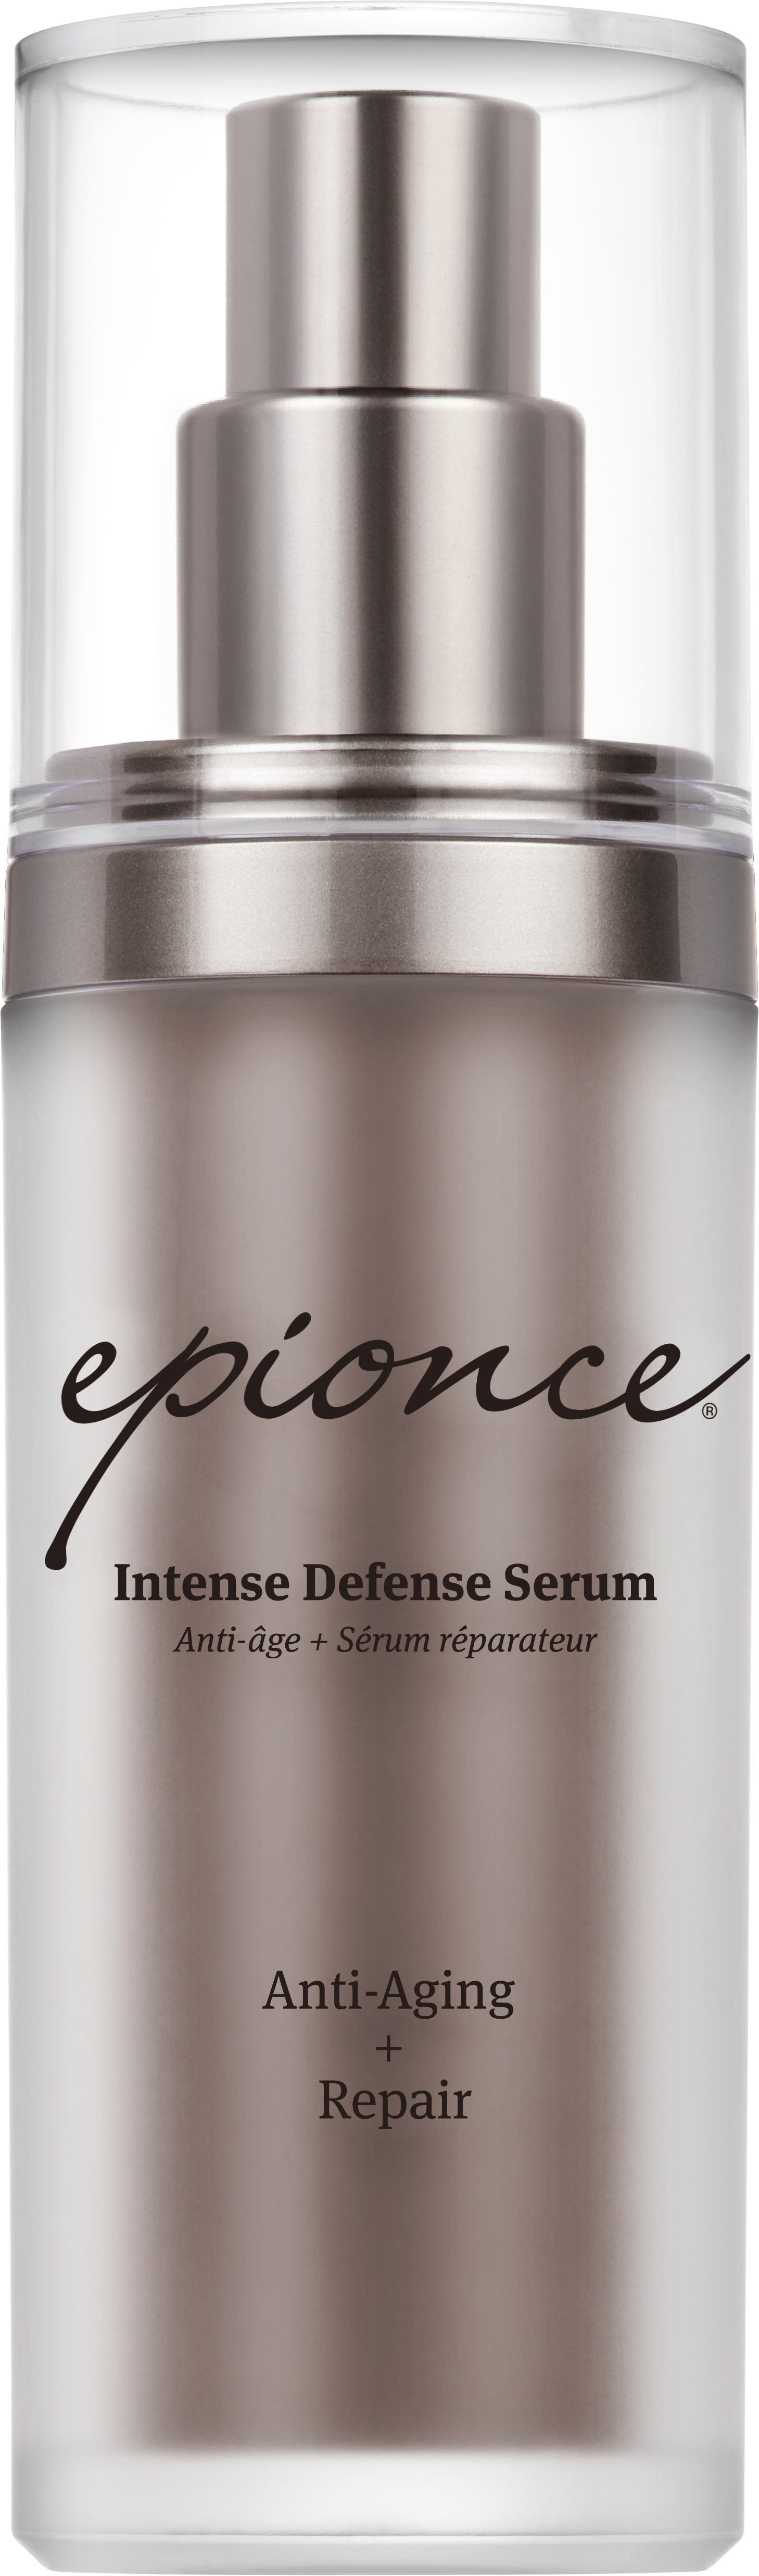 Epionce | Intense Defense Serum (30ml)